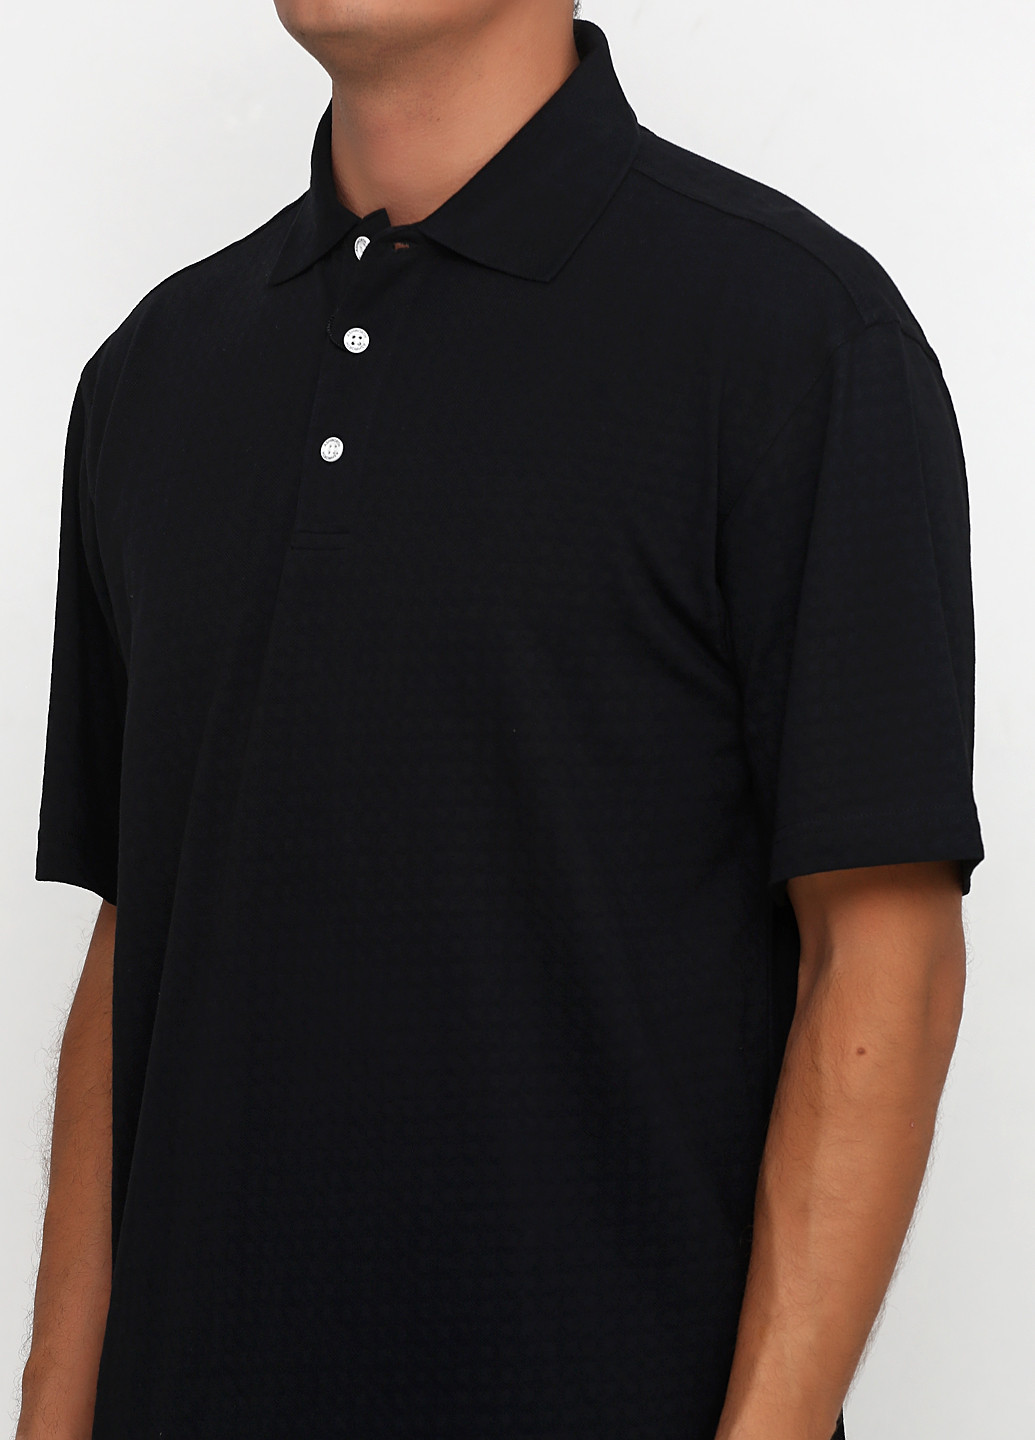 Черная футболка-поло для мужчин Ashworth фактурная